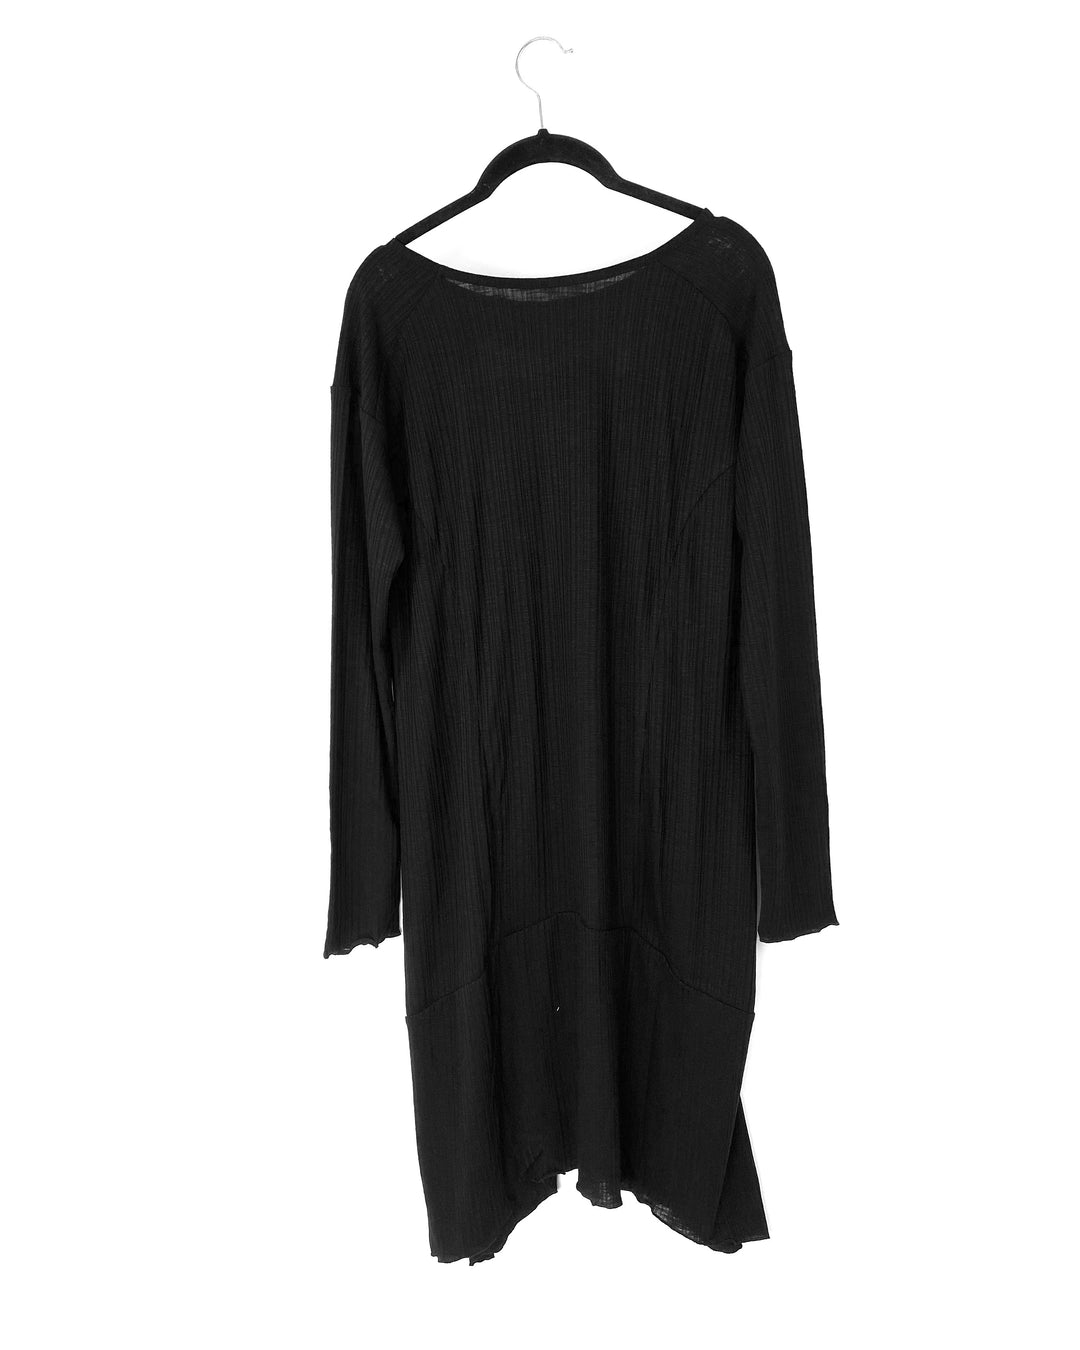 Black Ribbed Dress - Small and Medium